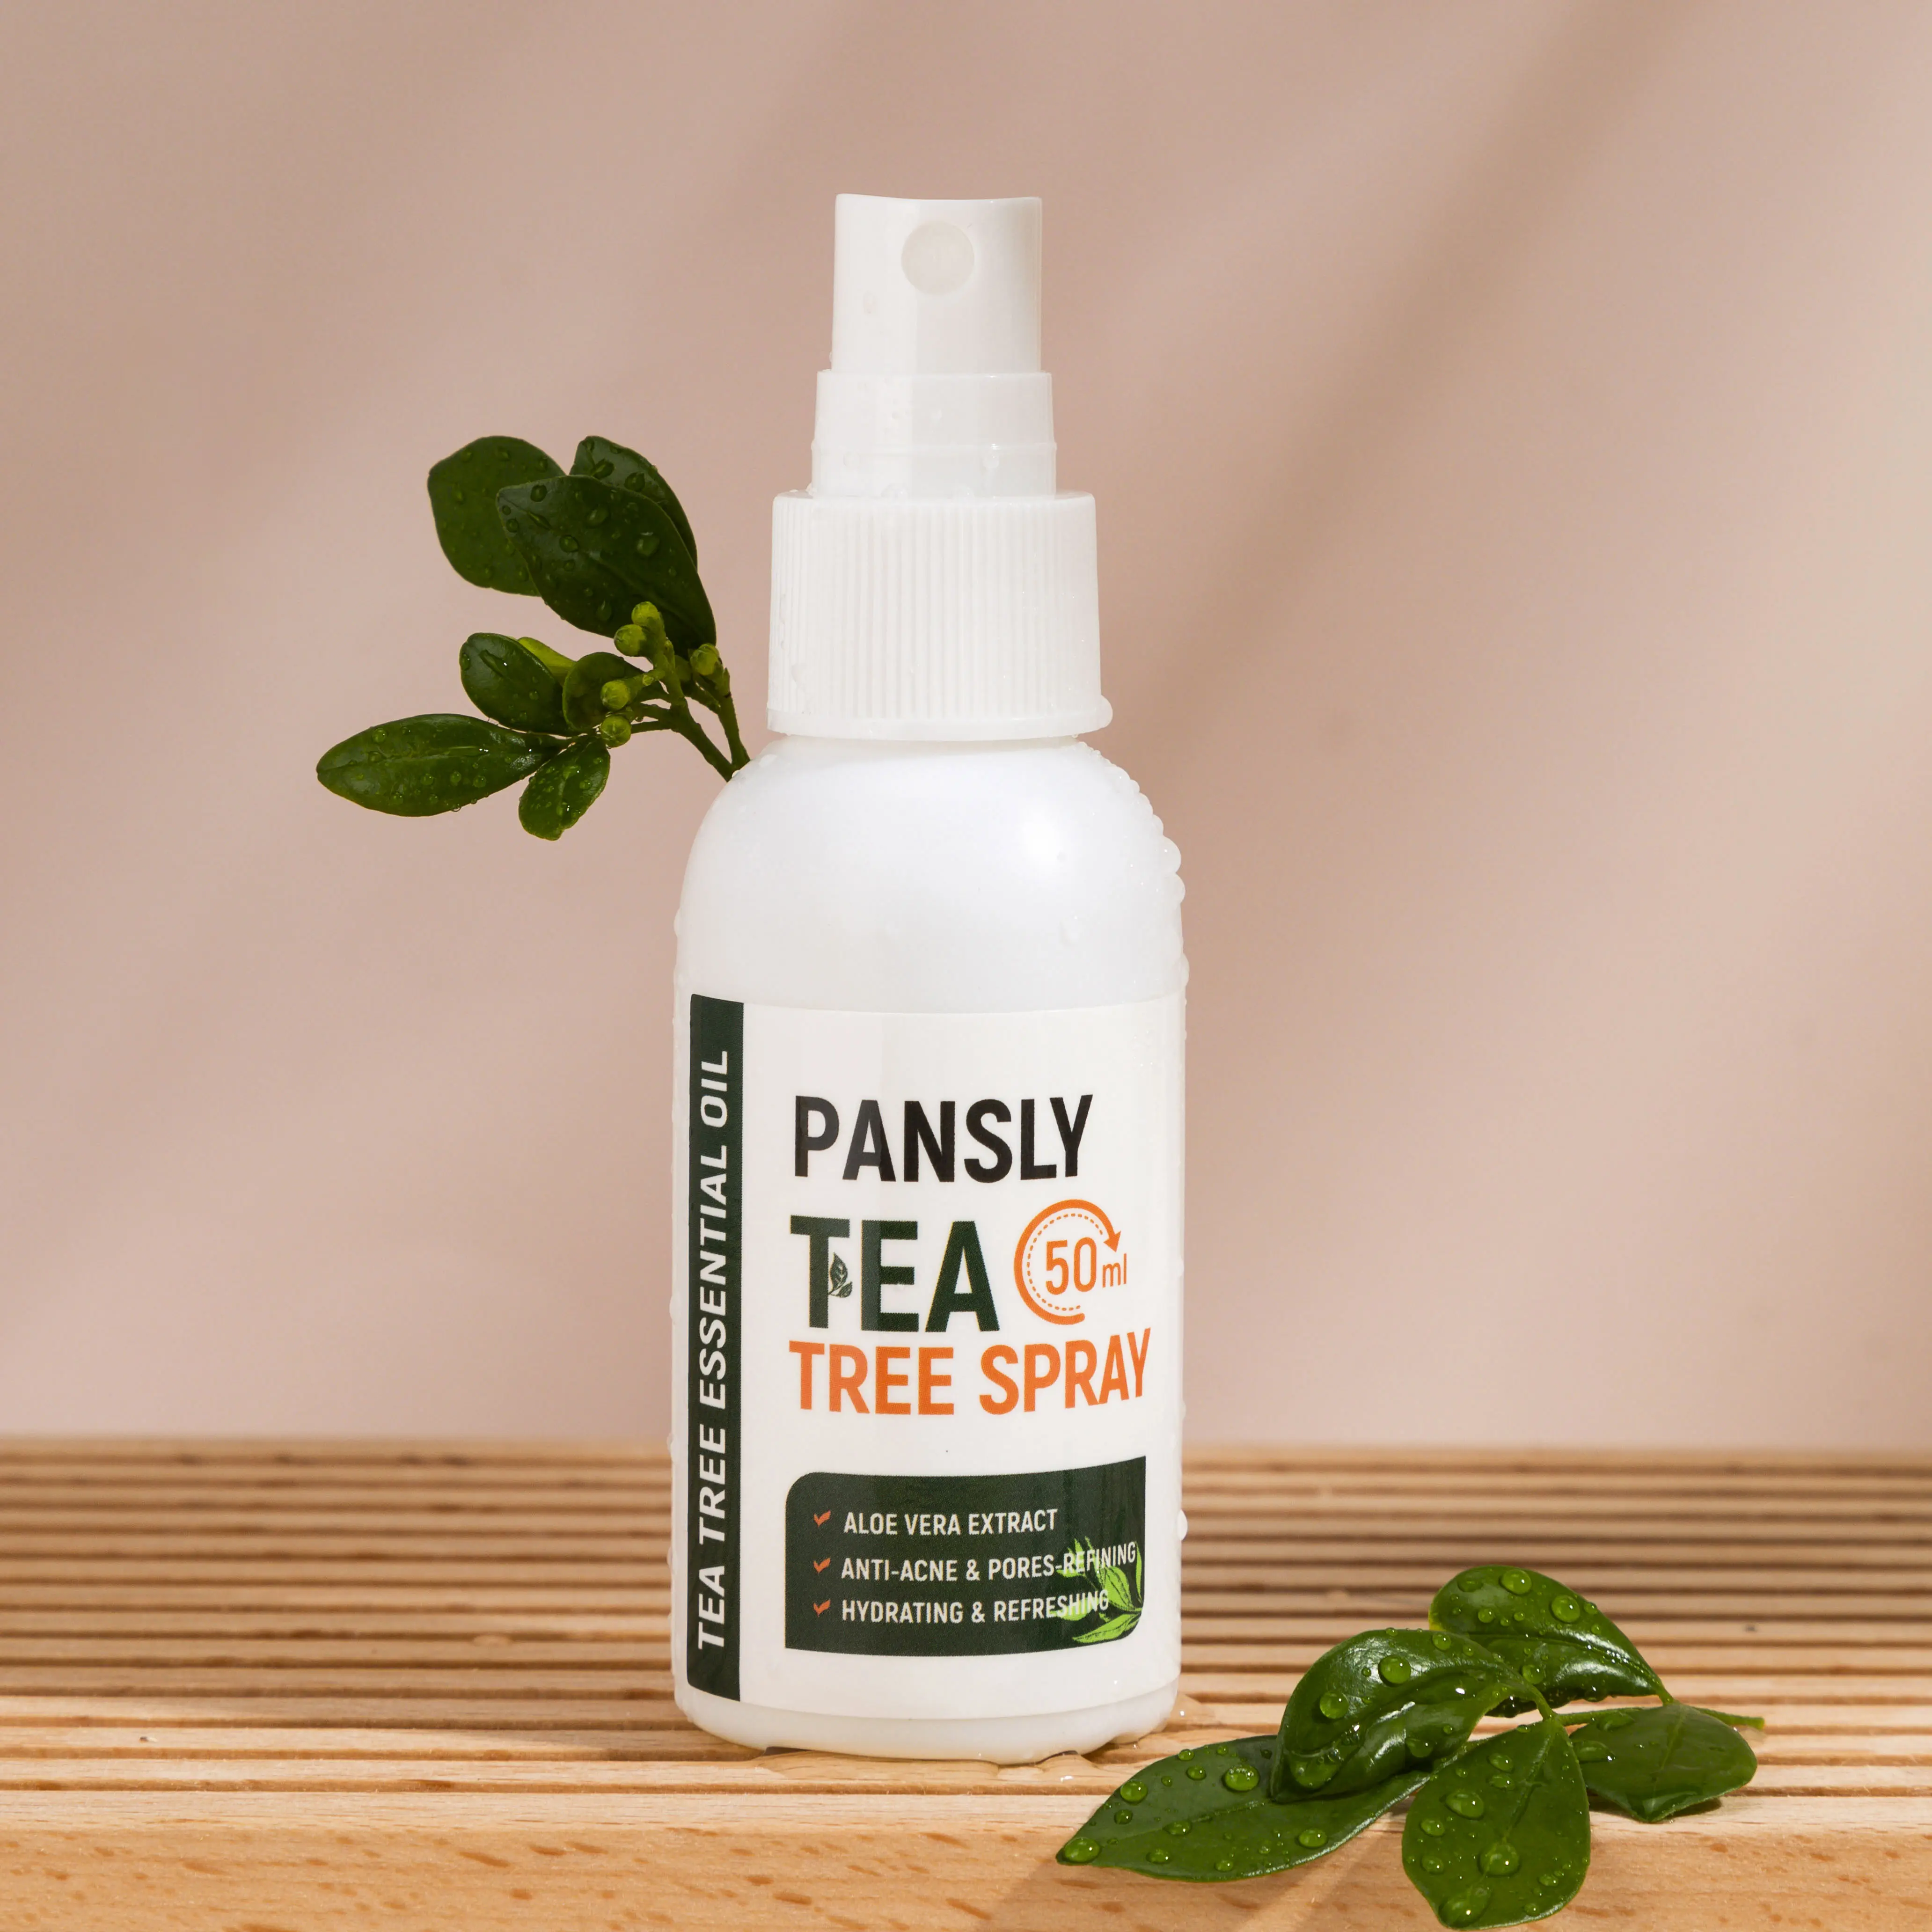 Pansly-aceite de árbol de Labeltea privado para cicatrices de acné, aceite orgánico de árbol de té, tóner natural, pulverizador esencial